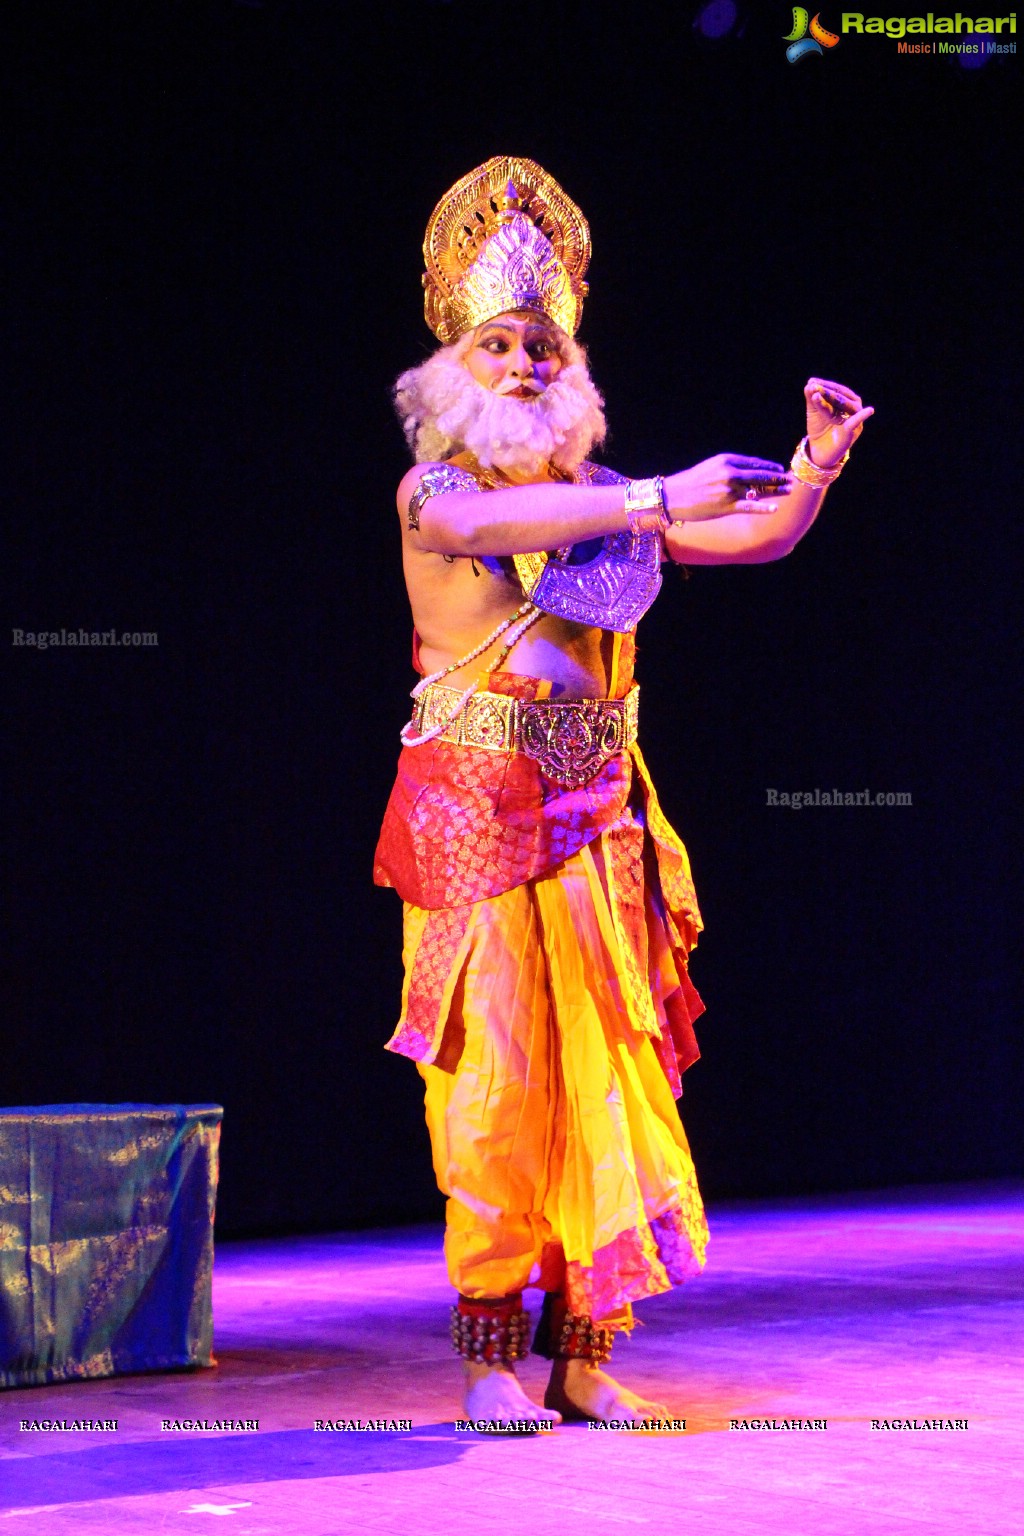 Sri Shinjaaravali Natyalaya's Kuchipudi Dance Ballet on Chandrika Parinayam at Ravindra Bharati